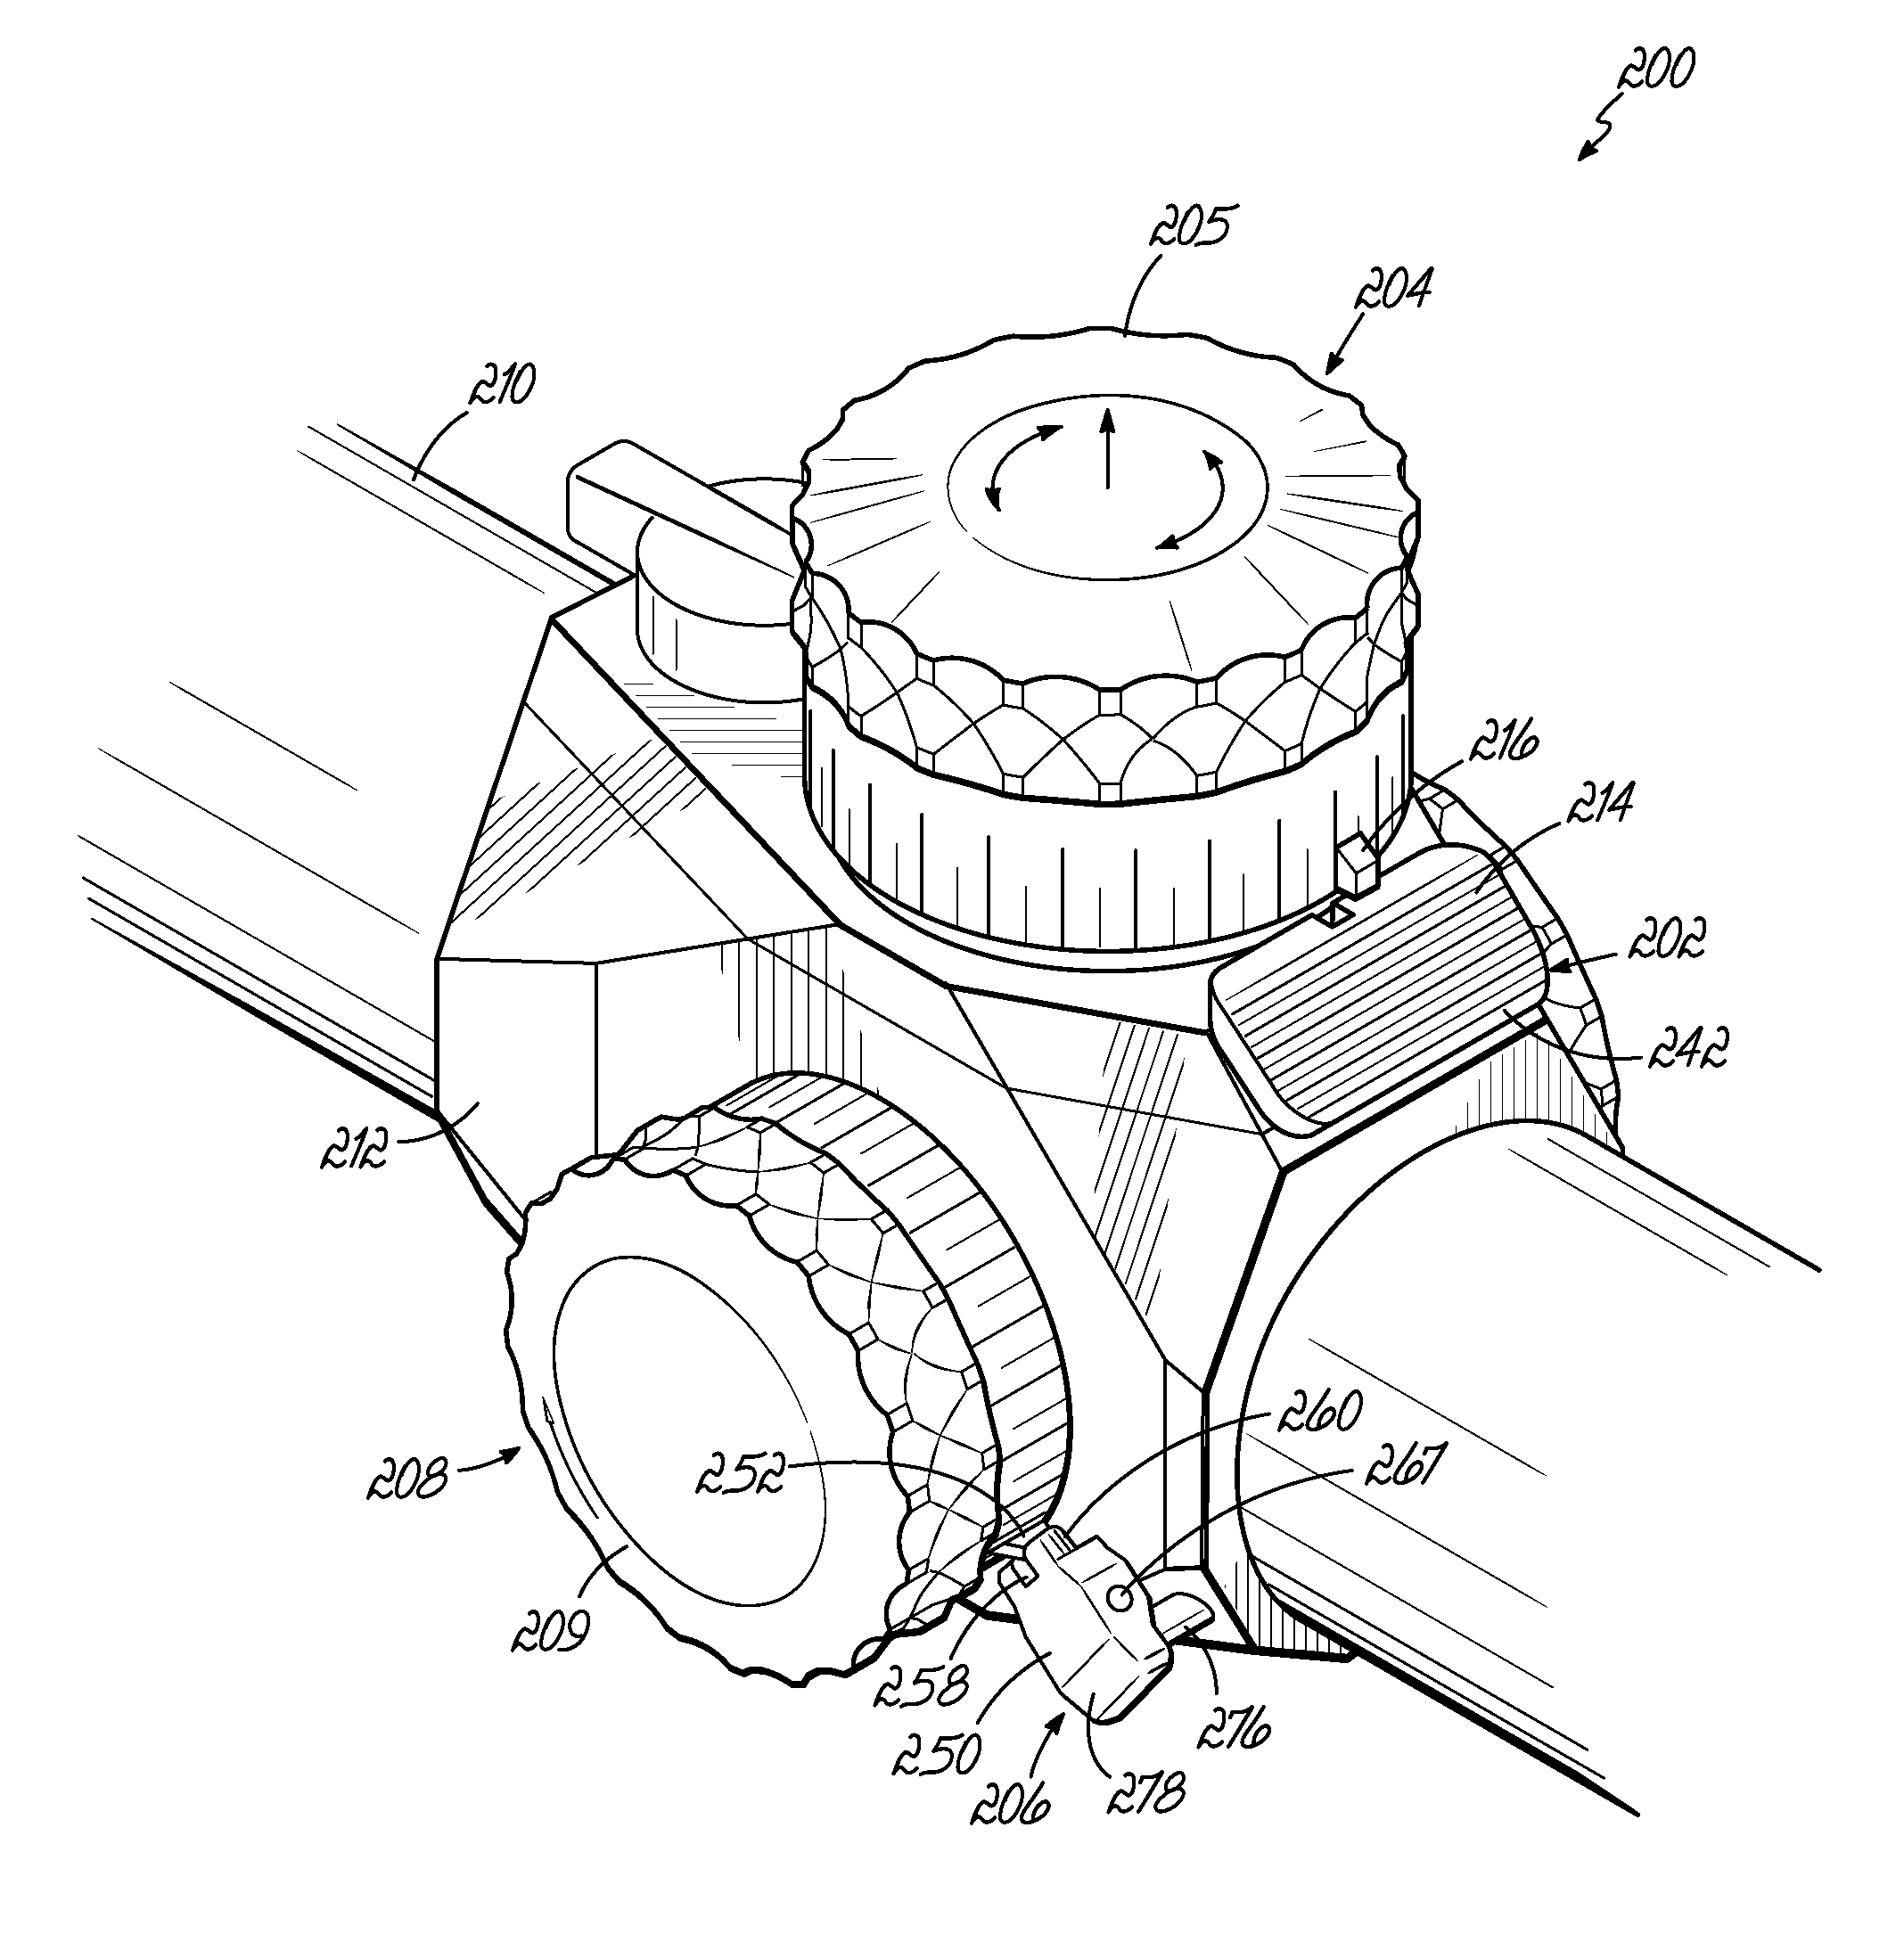 Locking adjustment dial mechanism for riflescope